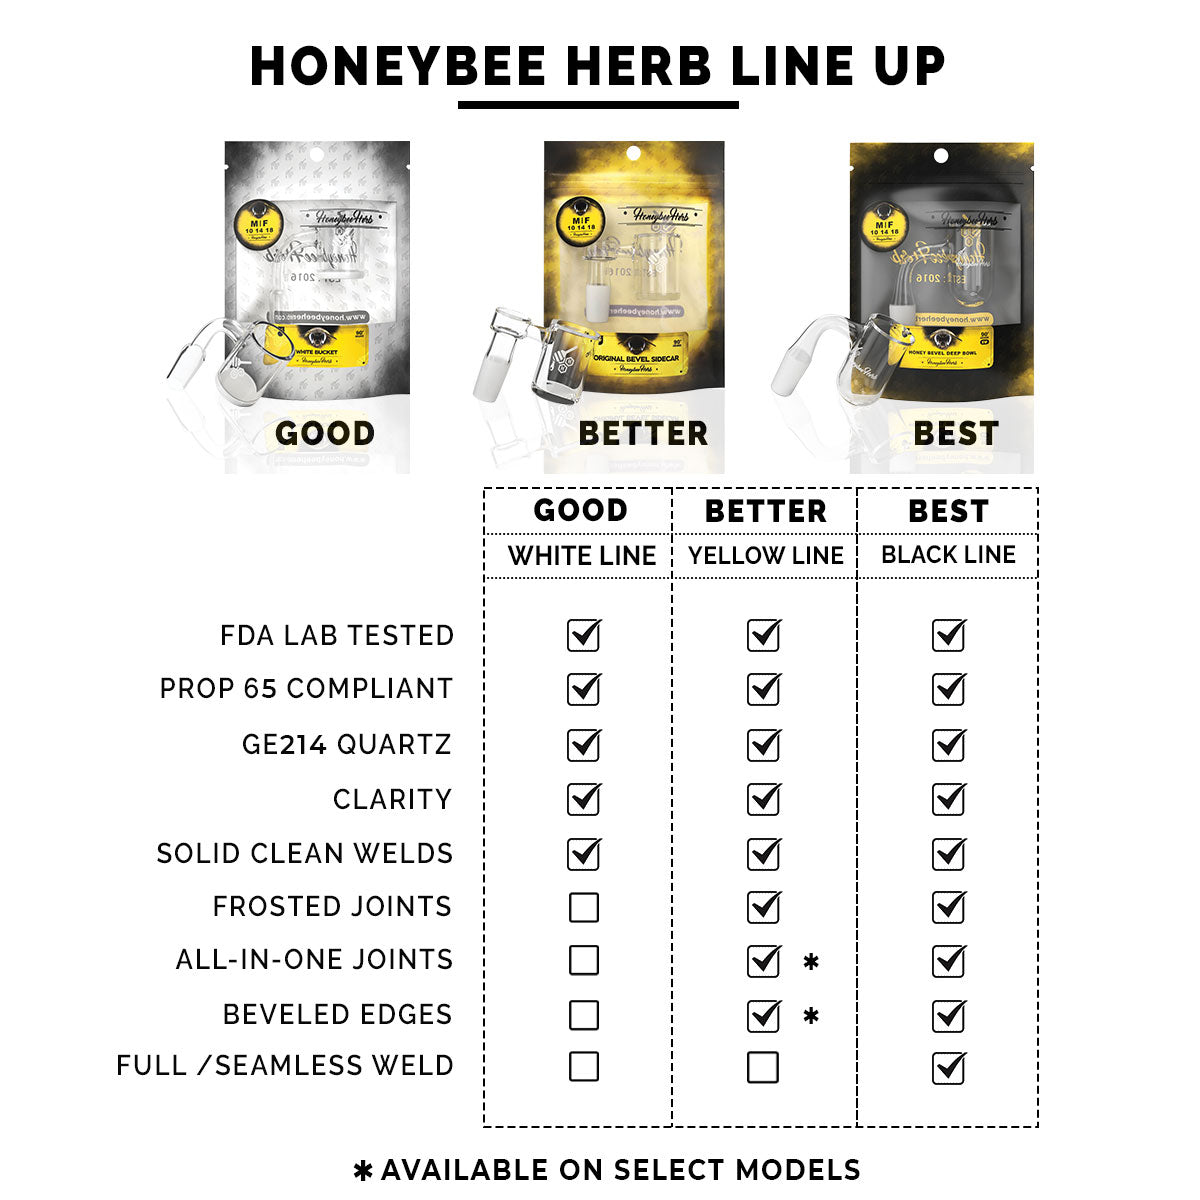 Honeybee Herb Quartz Banger quality chart showing Good, Better, Best product lines